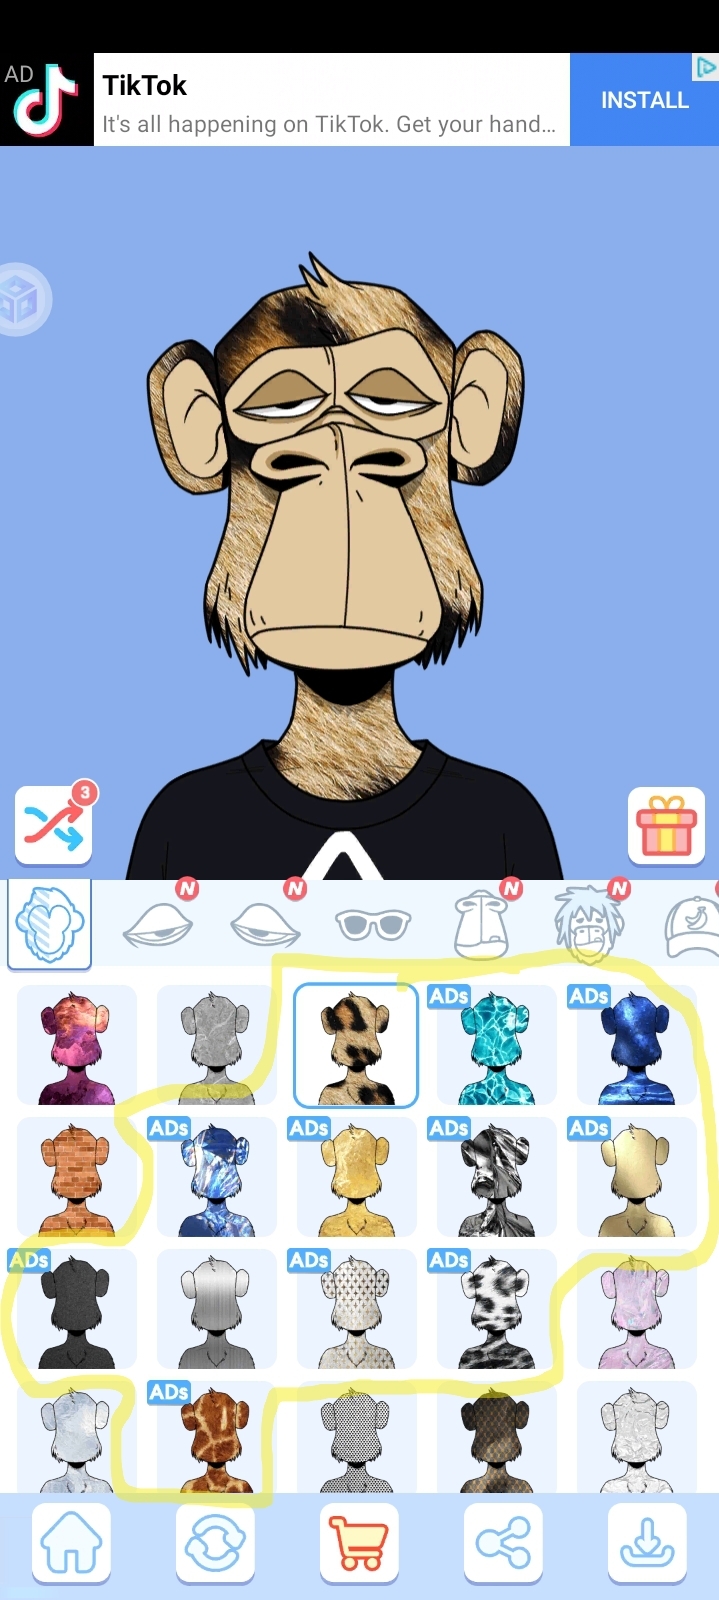 Bored Ape Creator MOD APK- NFT Art (No Ads) Download